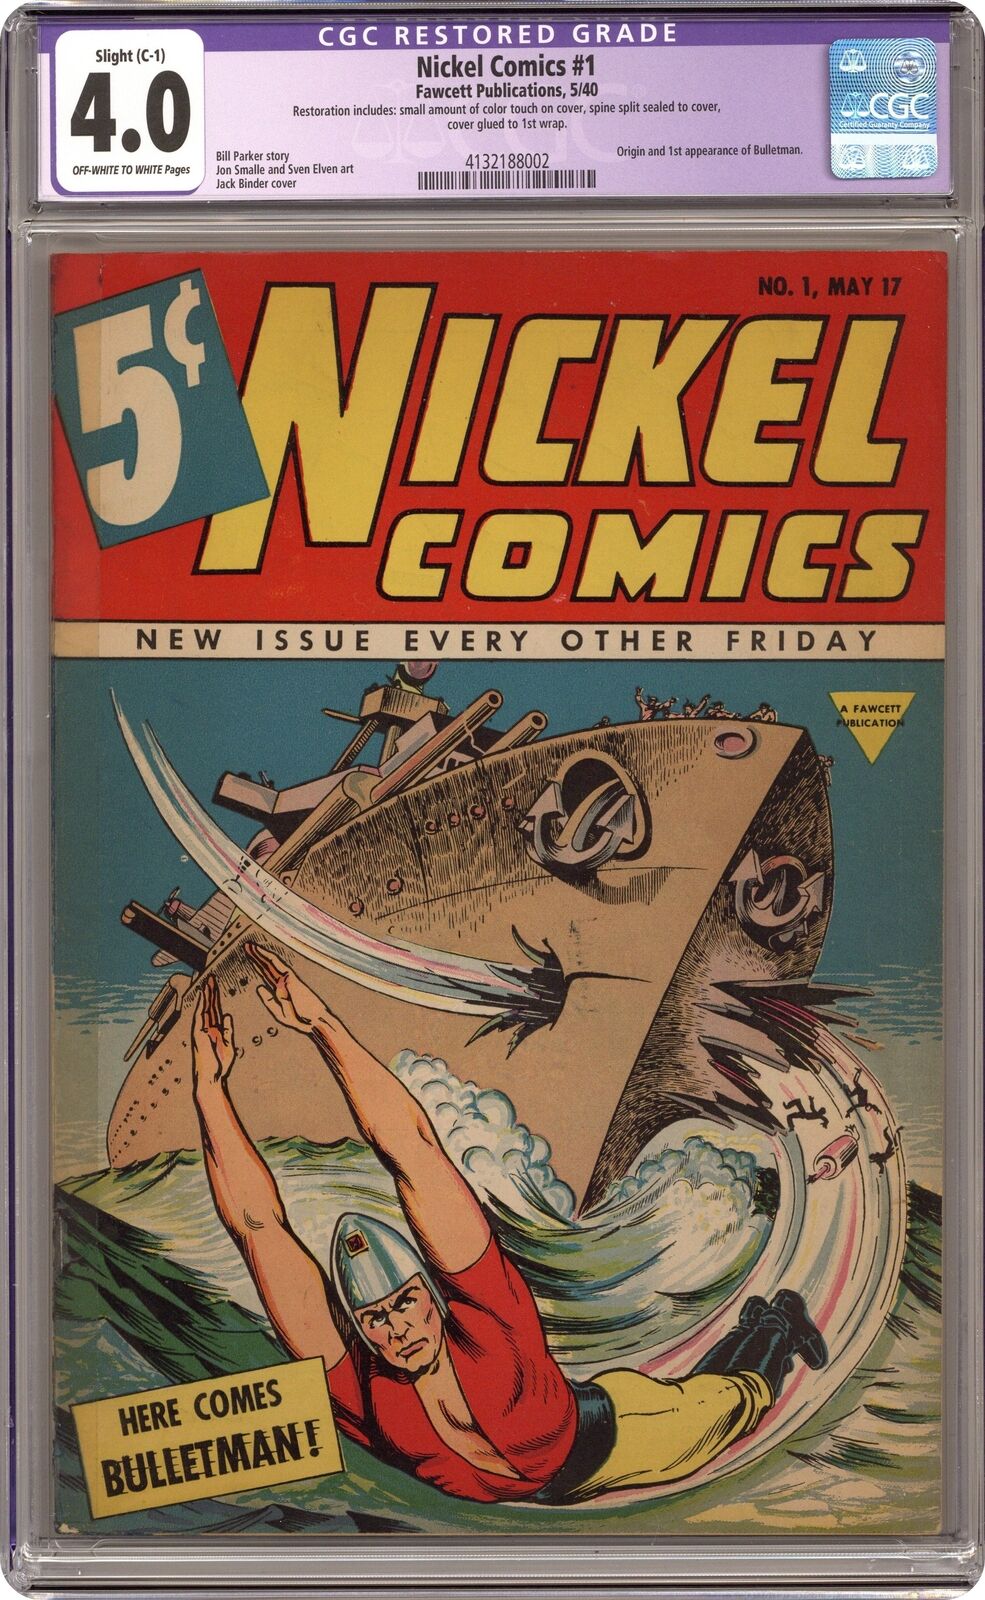 Nickel Comics #1 CGC 4.0 RESTORED 1940 4132188002 1st app. Bulletman